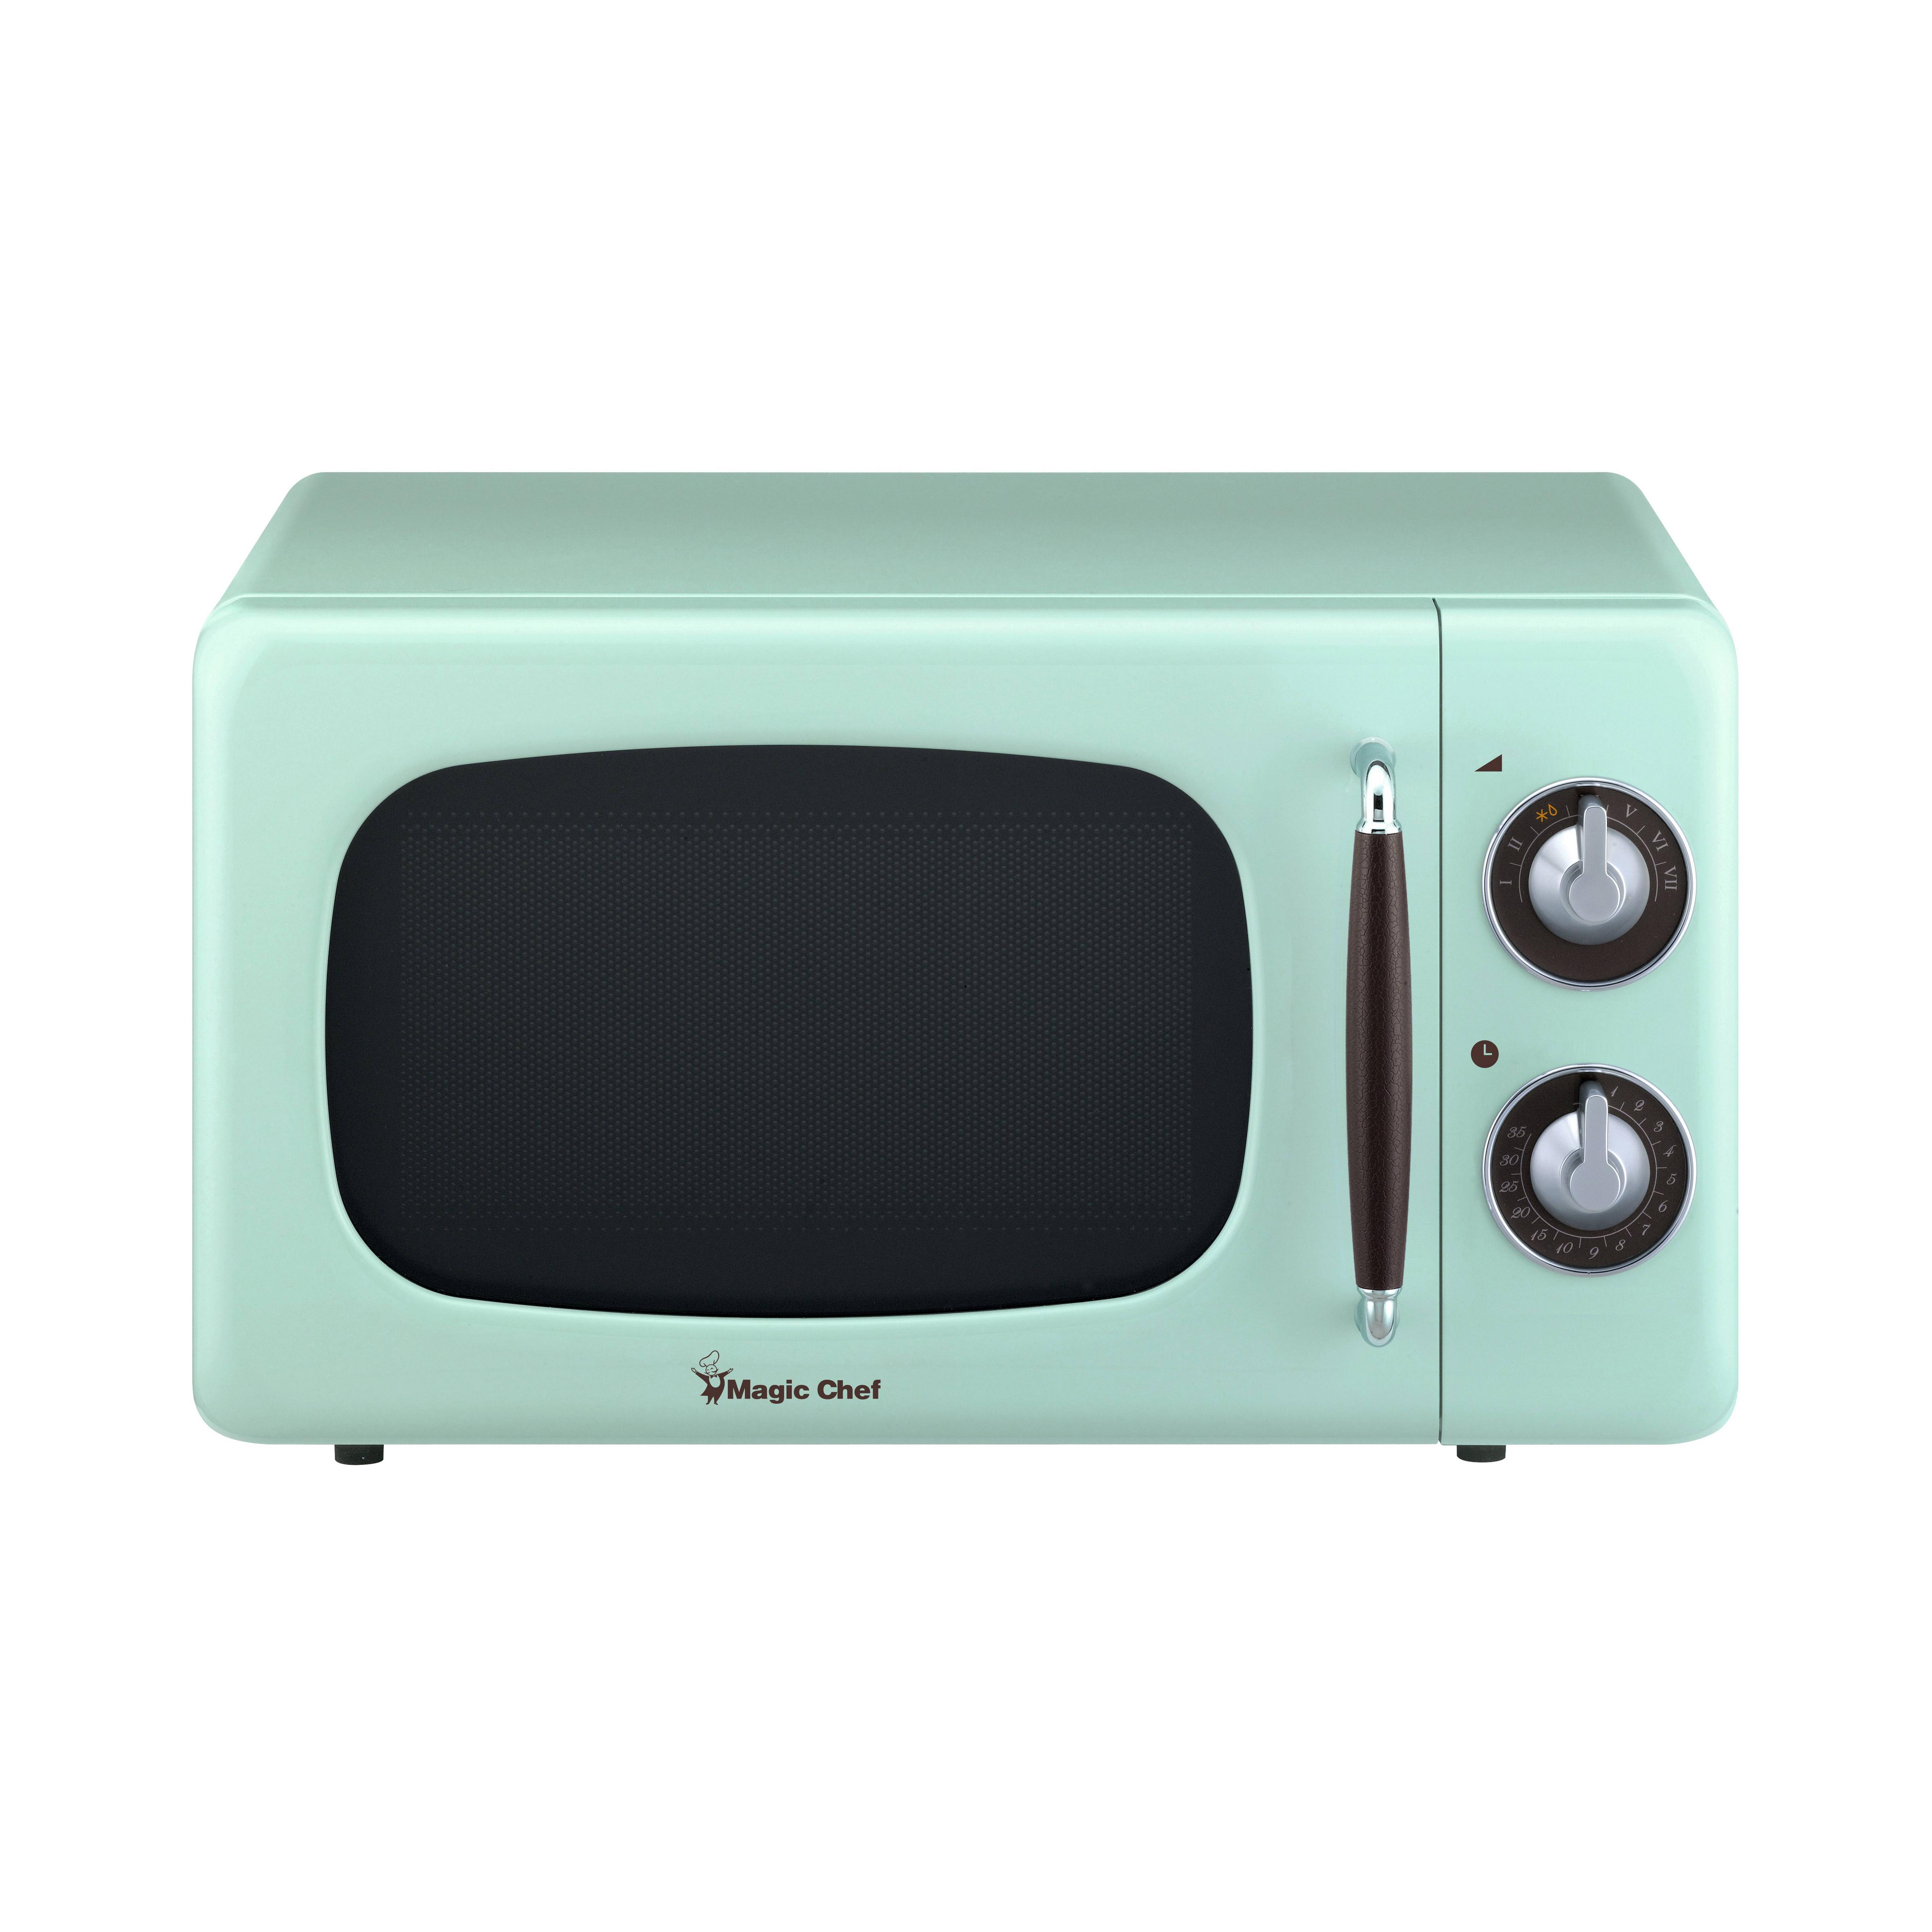 0.7 Cu ft New Magic Chef 700 Watt Countertop Microwave in Mint Green - image 1 of 5